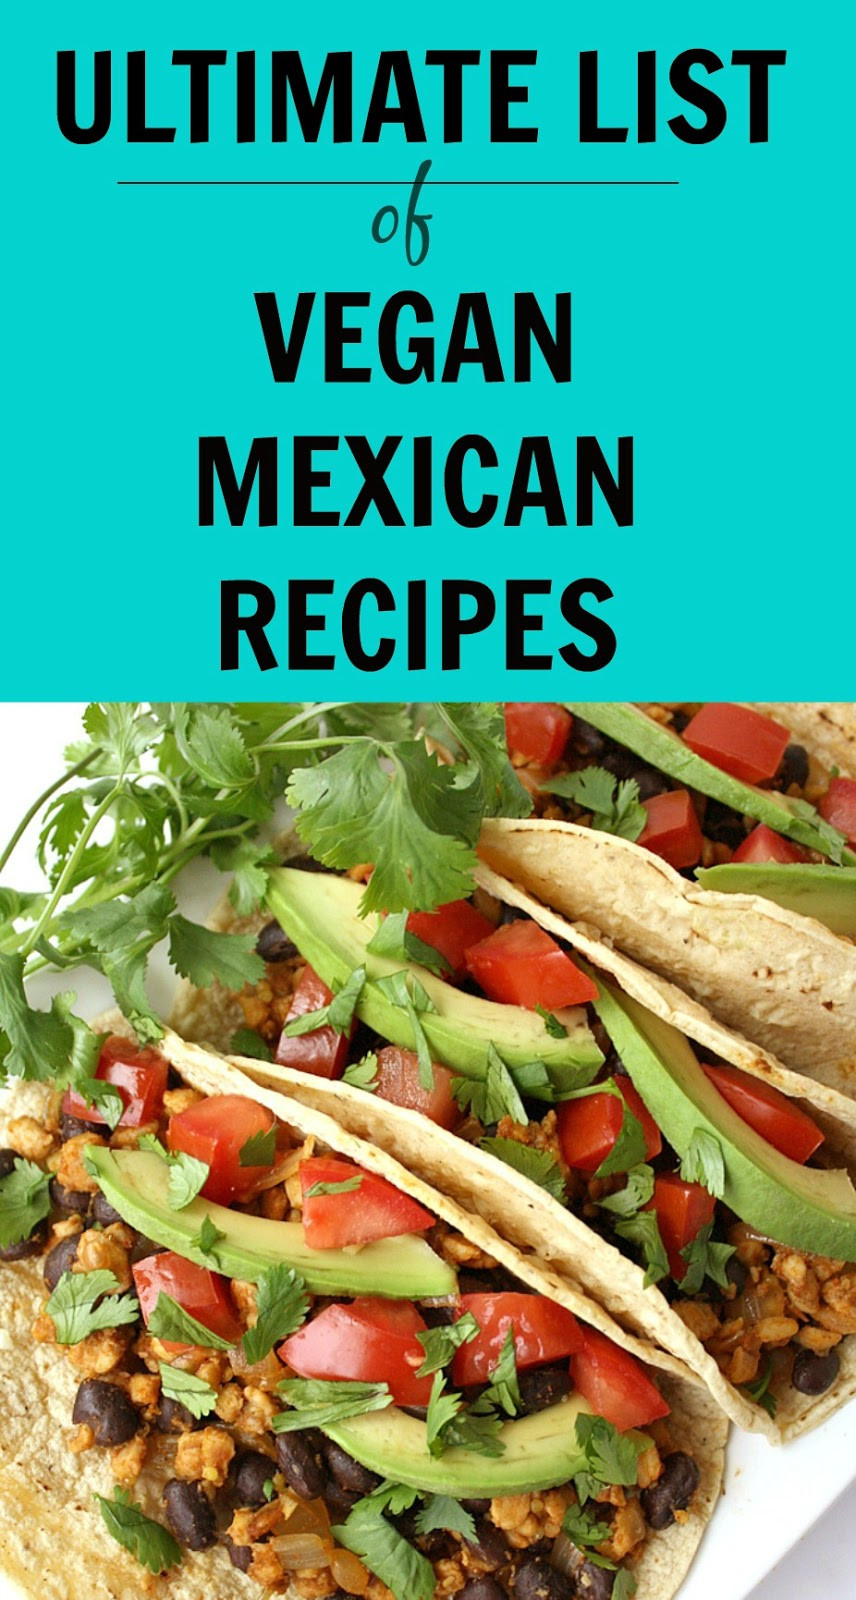 Vegetarian Mexican Food Recipes
 The Garden Grazer Ultimate List of Vegan Mexican Recipes